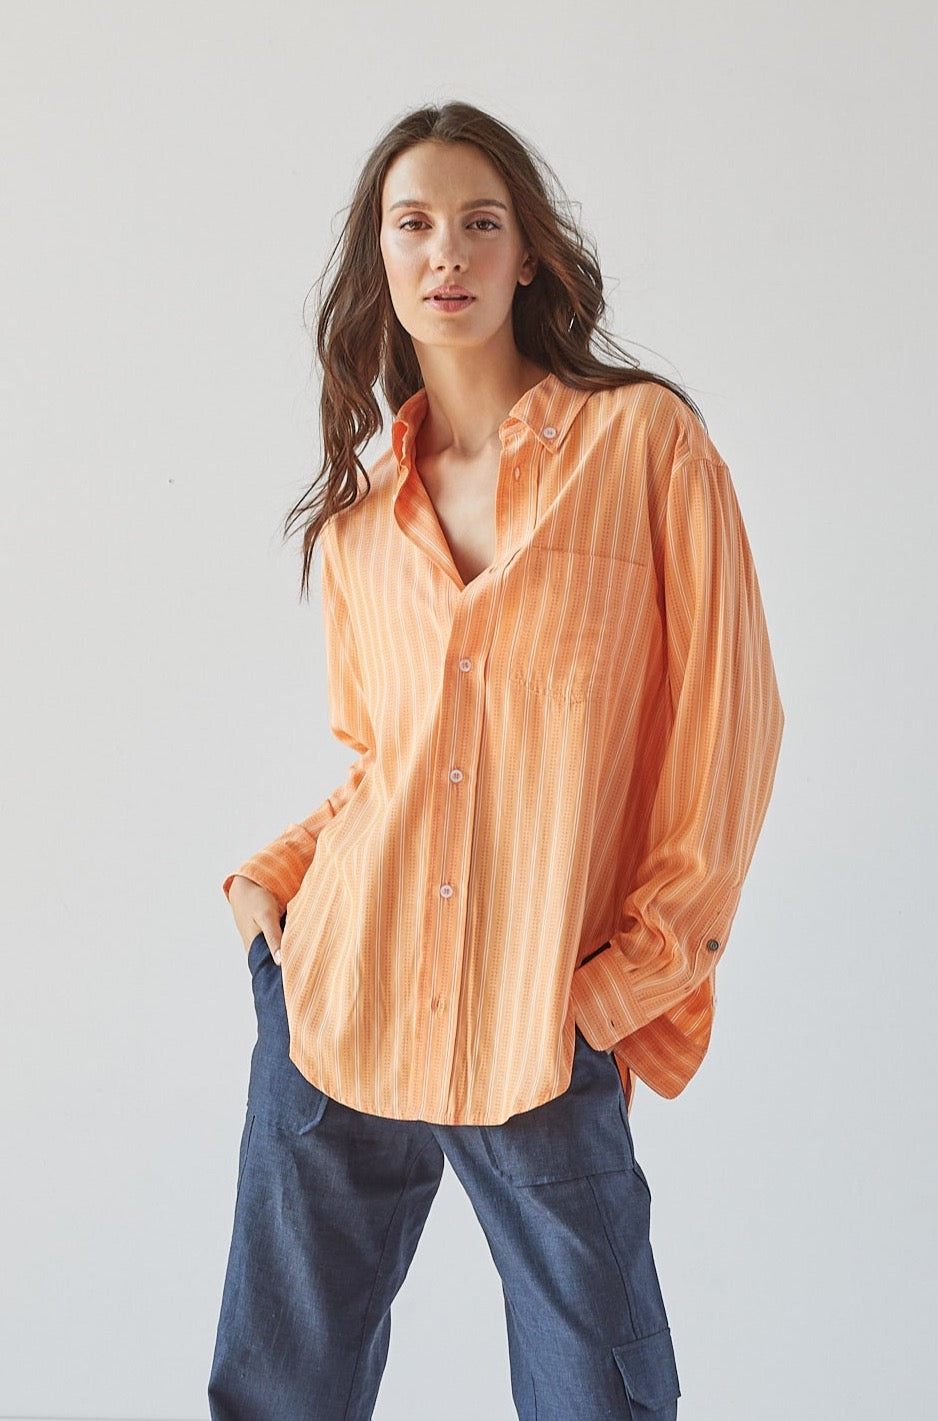 Adroit Atelier Kean Boyfriend Striped Button Down Shirt - Tangerine